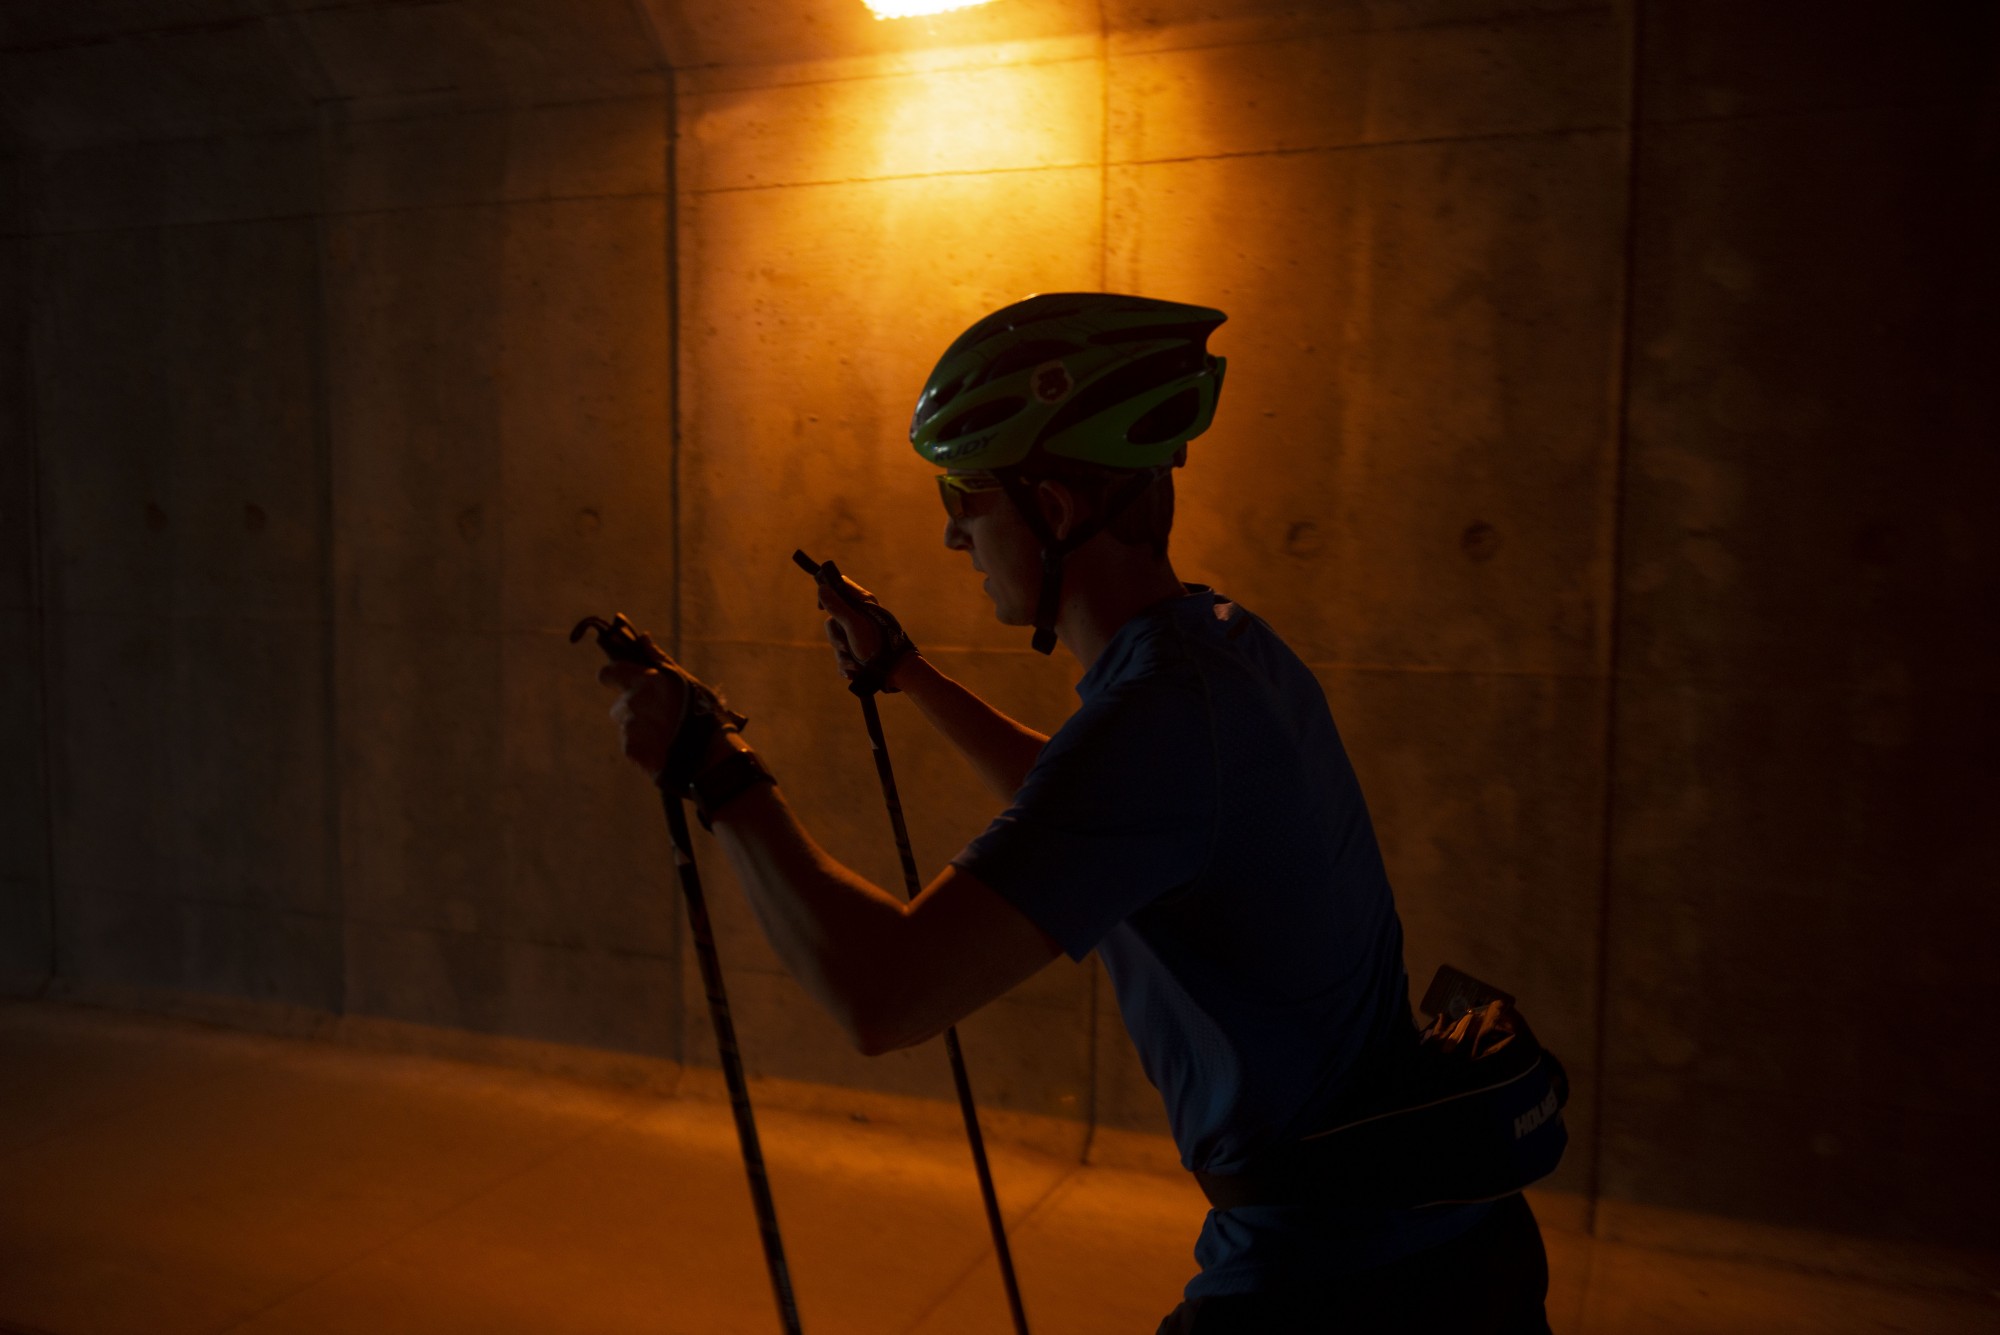 3:36 p.m.
Junior Tony Mathie roller skis through a tunnel on the bluff street bikeway. 